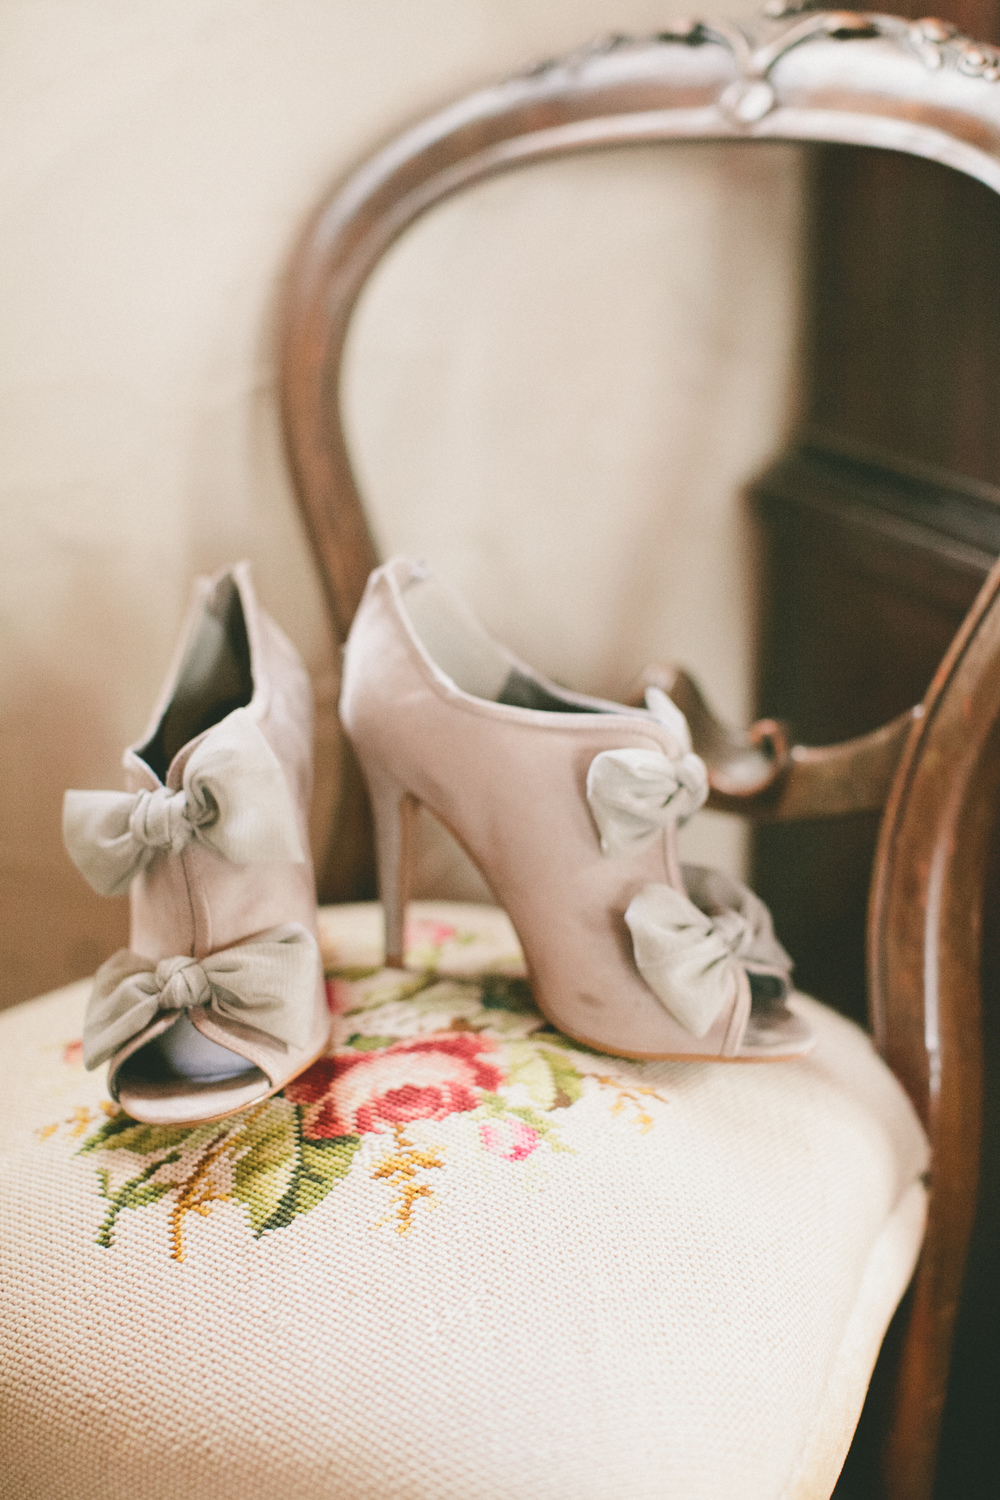 winter wedding shoes